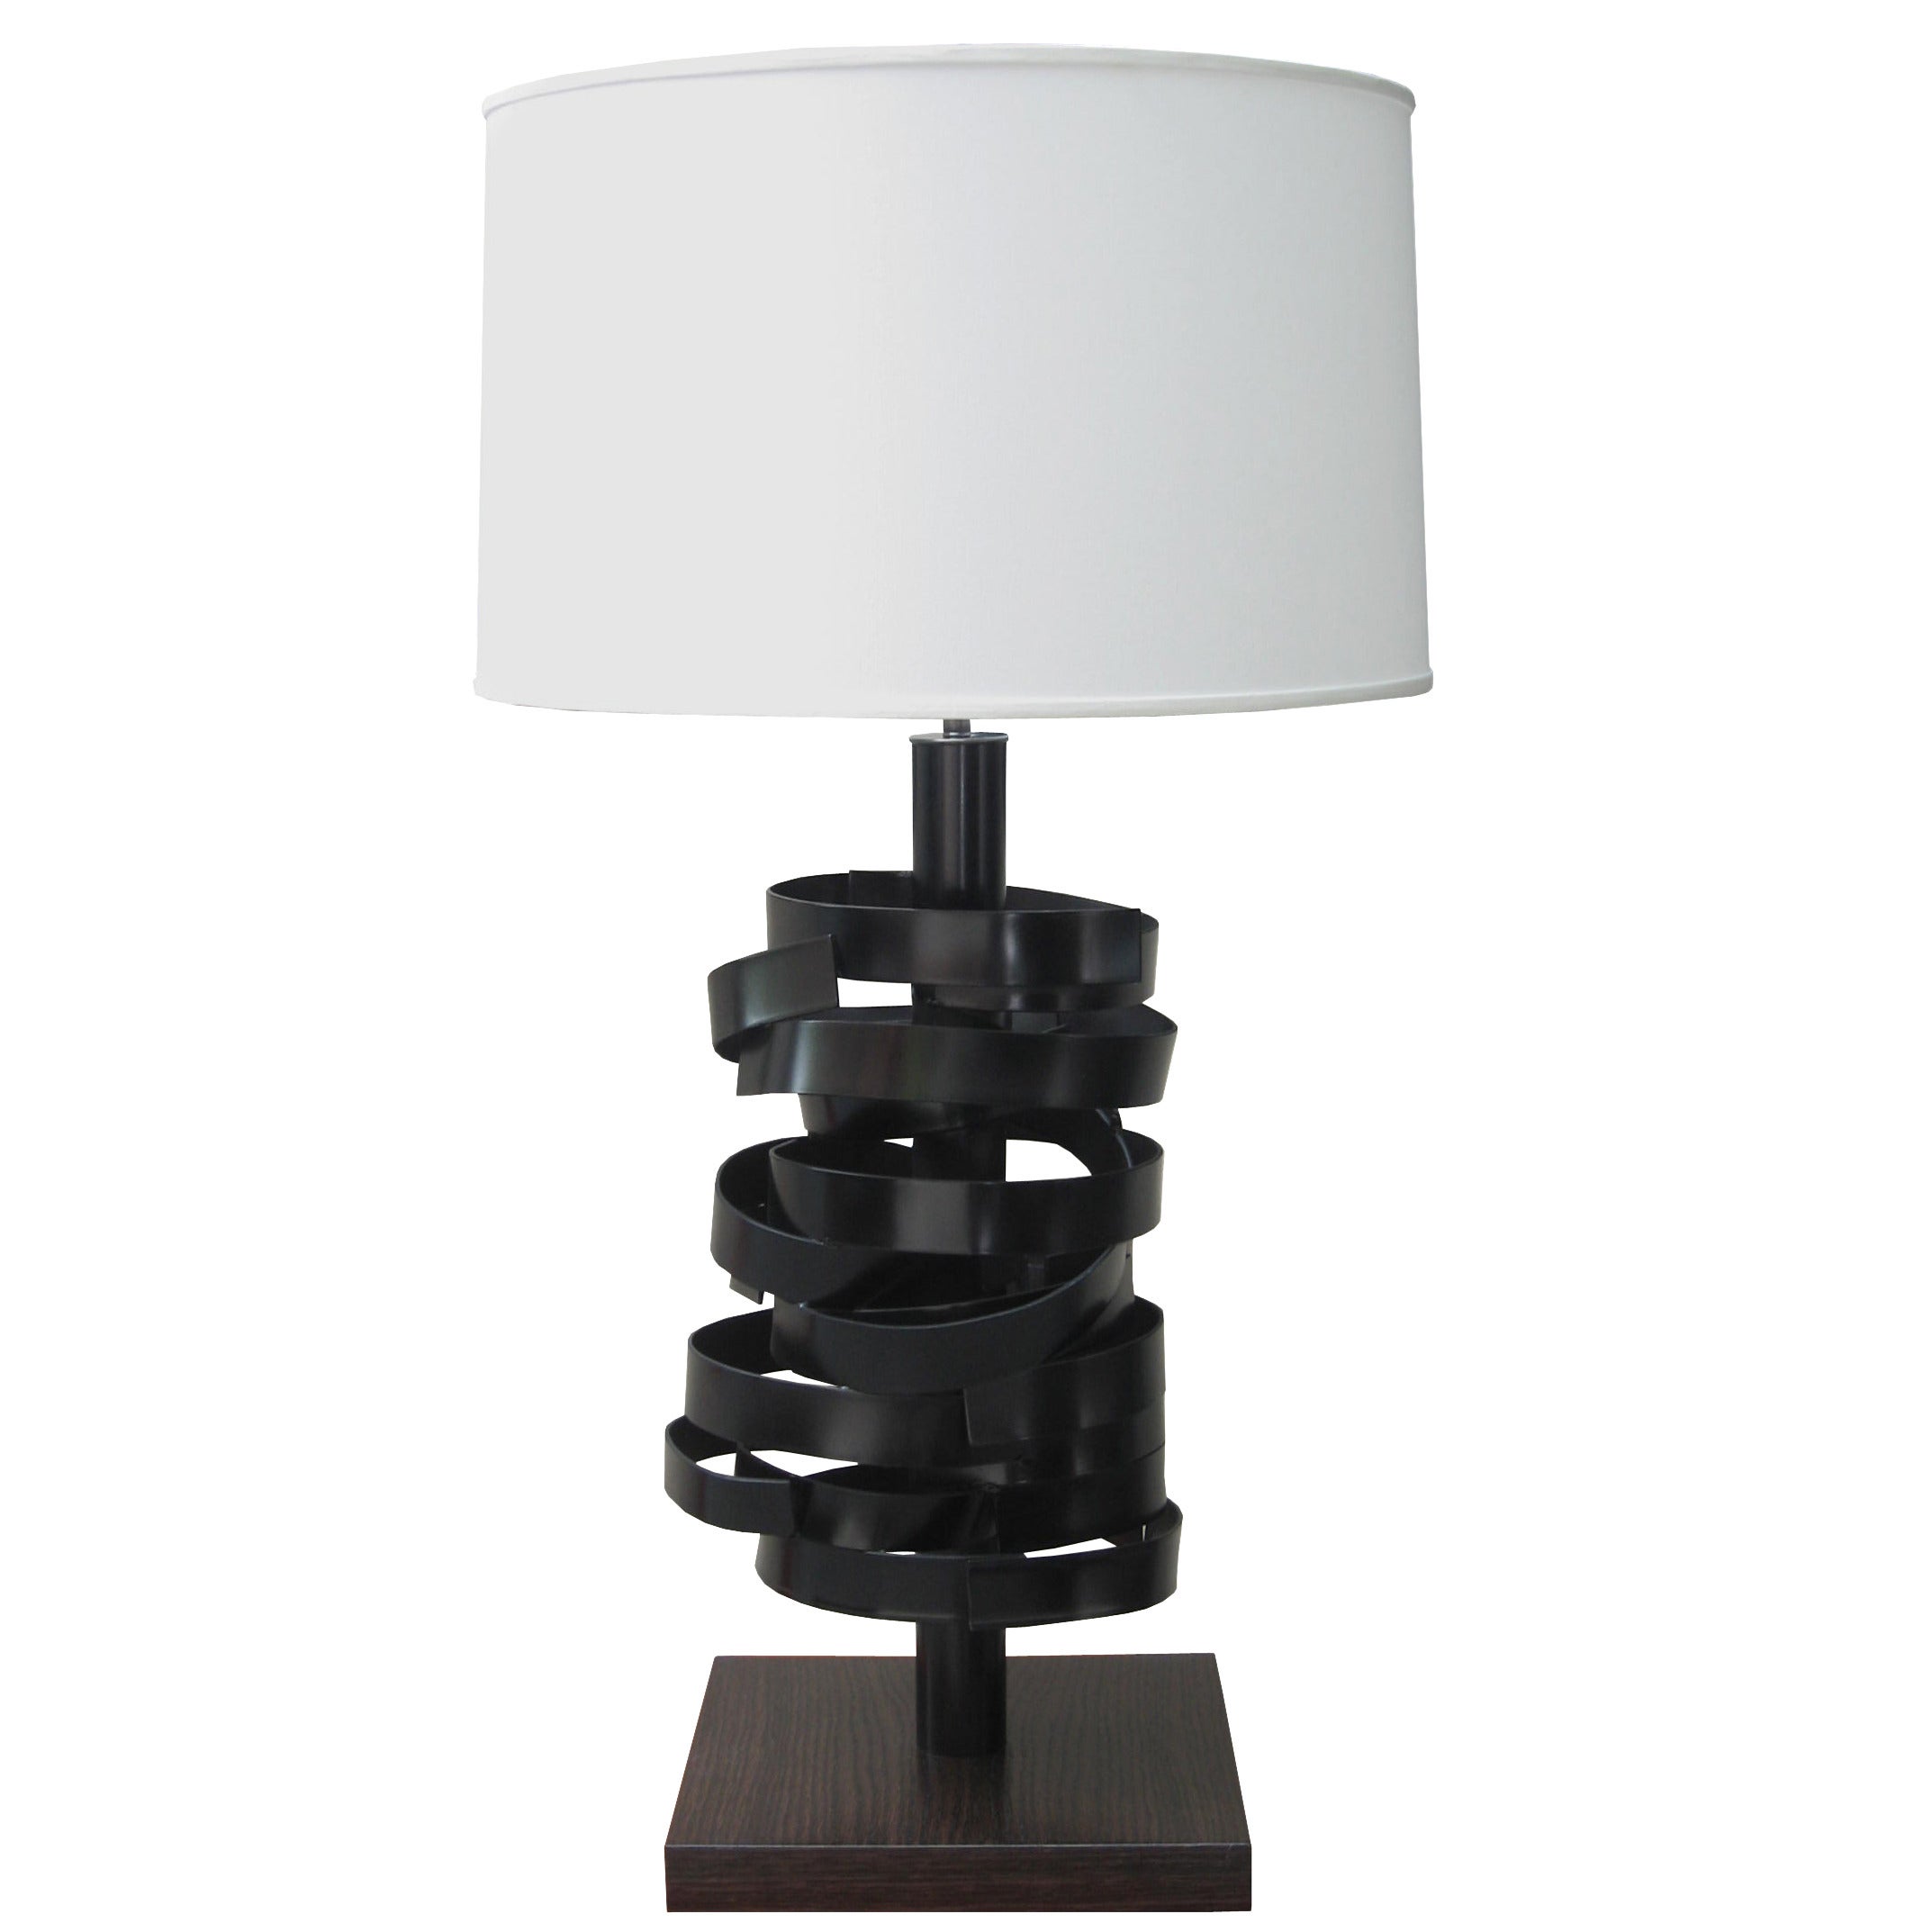 Sculptural Leonora Mendoza Modernist Limited Edition Table Lamp